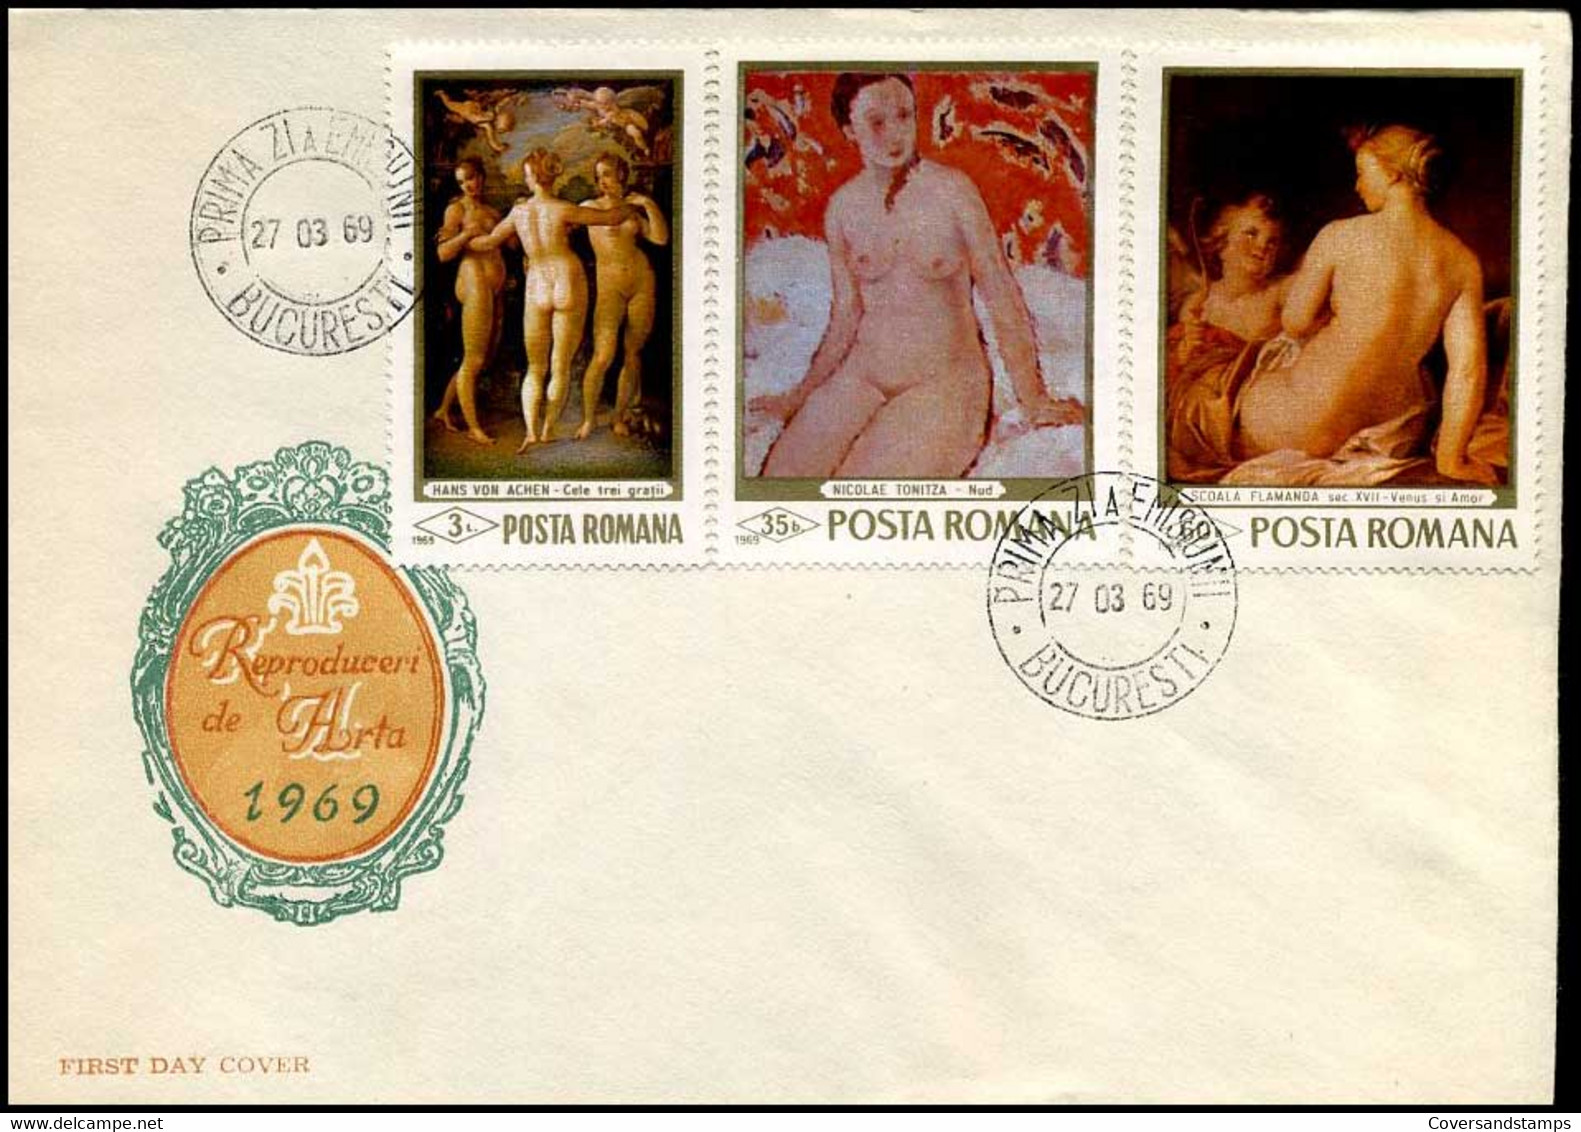 Republica Populara Romana - FDC - Reproduceri De Arta 1969 - FDC